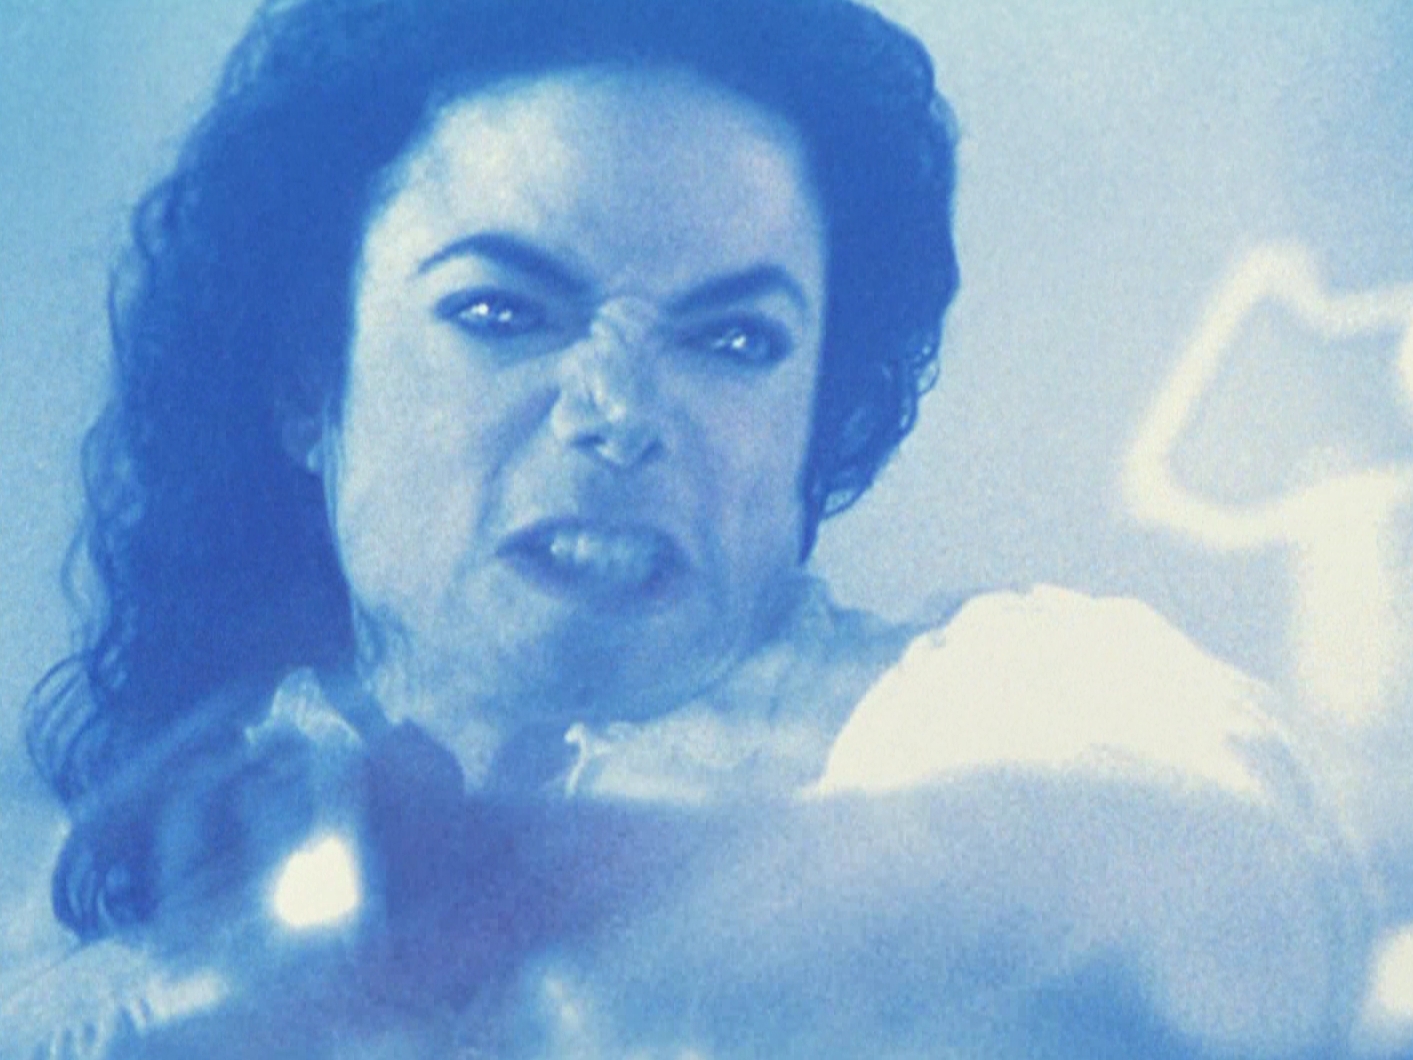 Michael Jackson Ghost Music Video Full Version